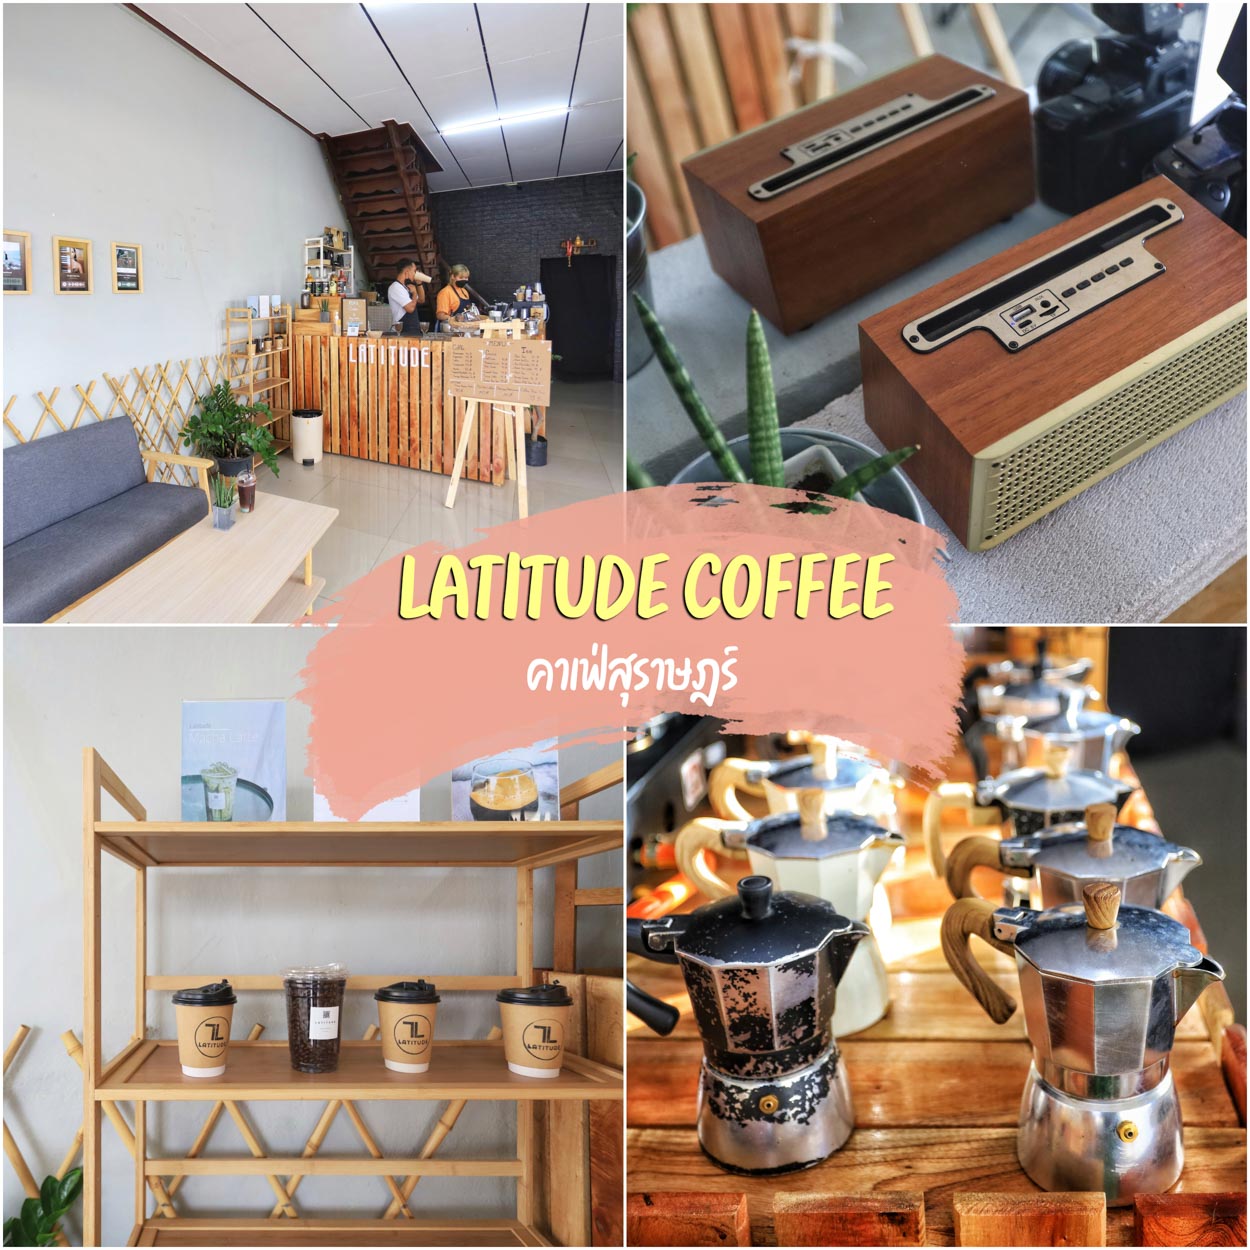 Latitude coffee  คาเฟ่สุราษฎร์ Coffee สโลบาร์ สุดปัง มีกาแฟให้เลือกทานหลายแบบ